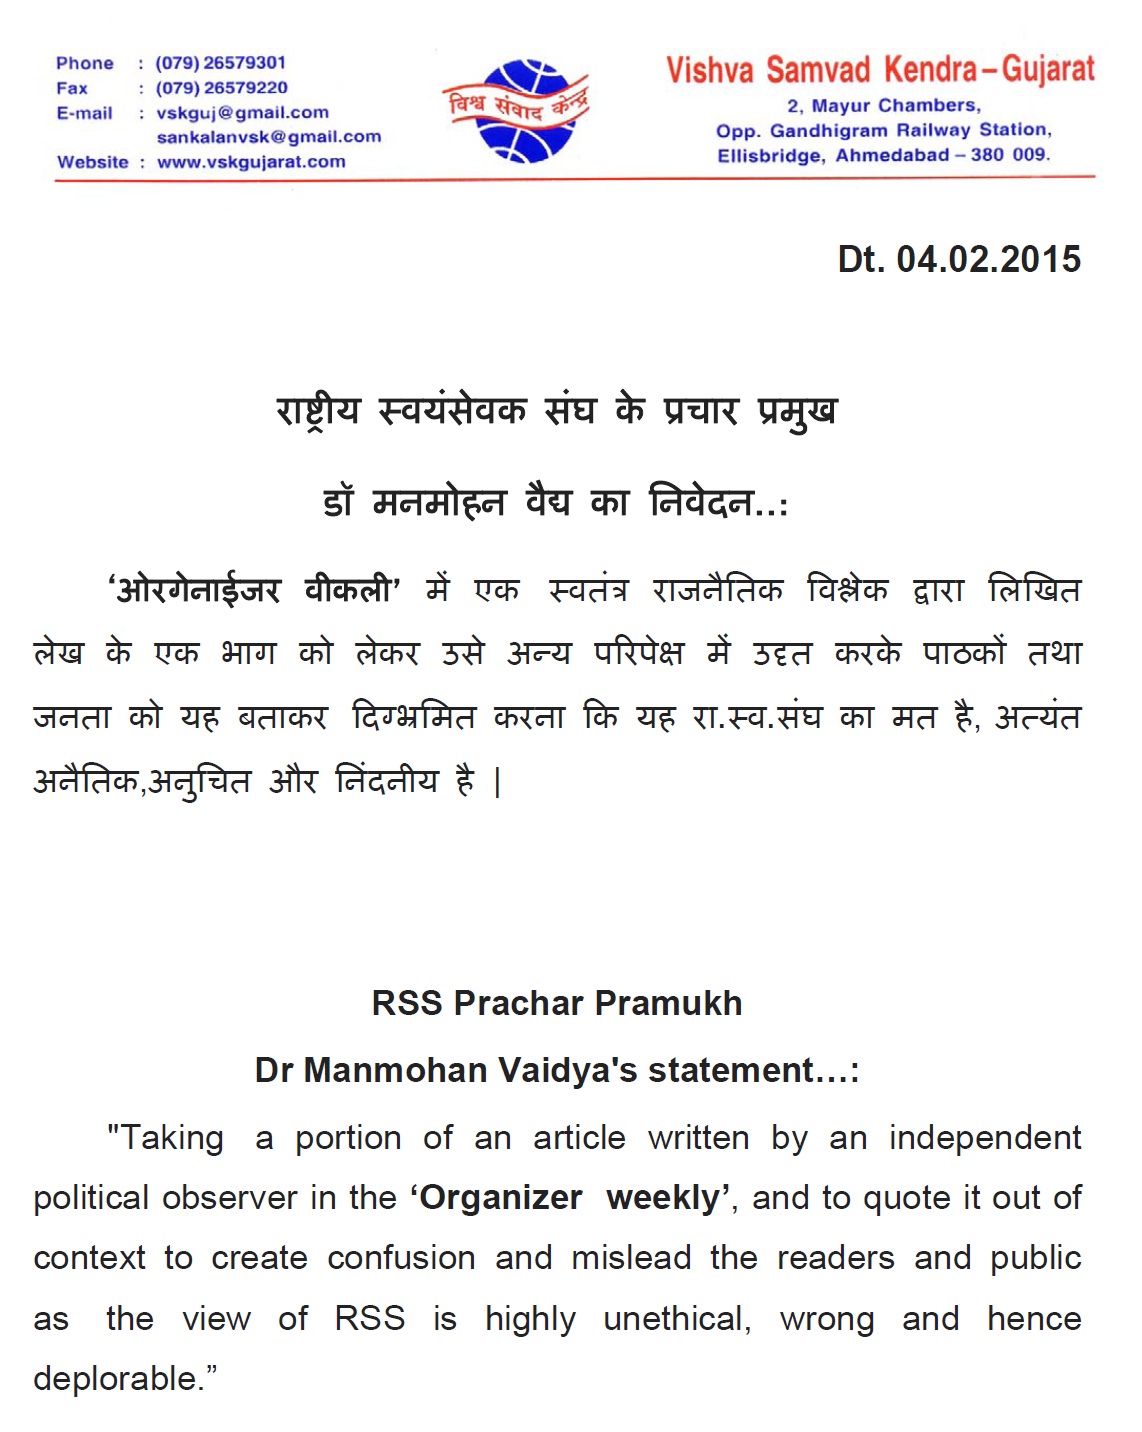 STATEMENT by Dr Manmohan Vaidya Feb-4-2015